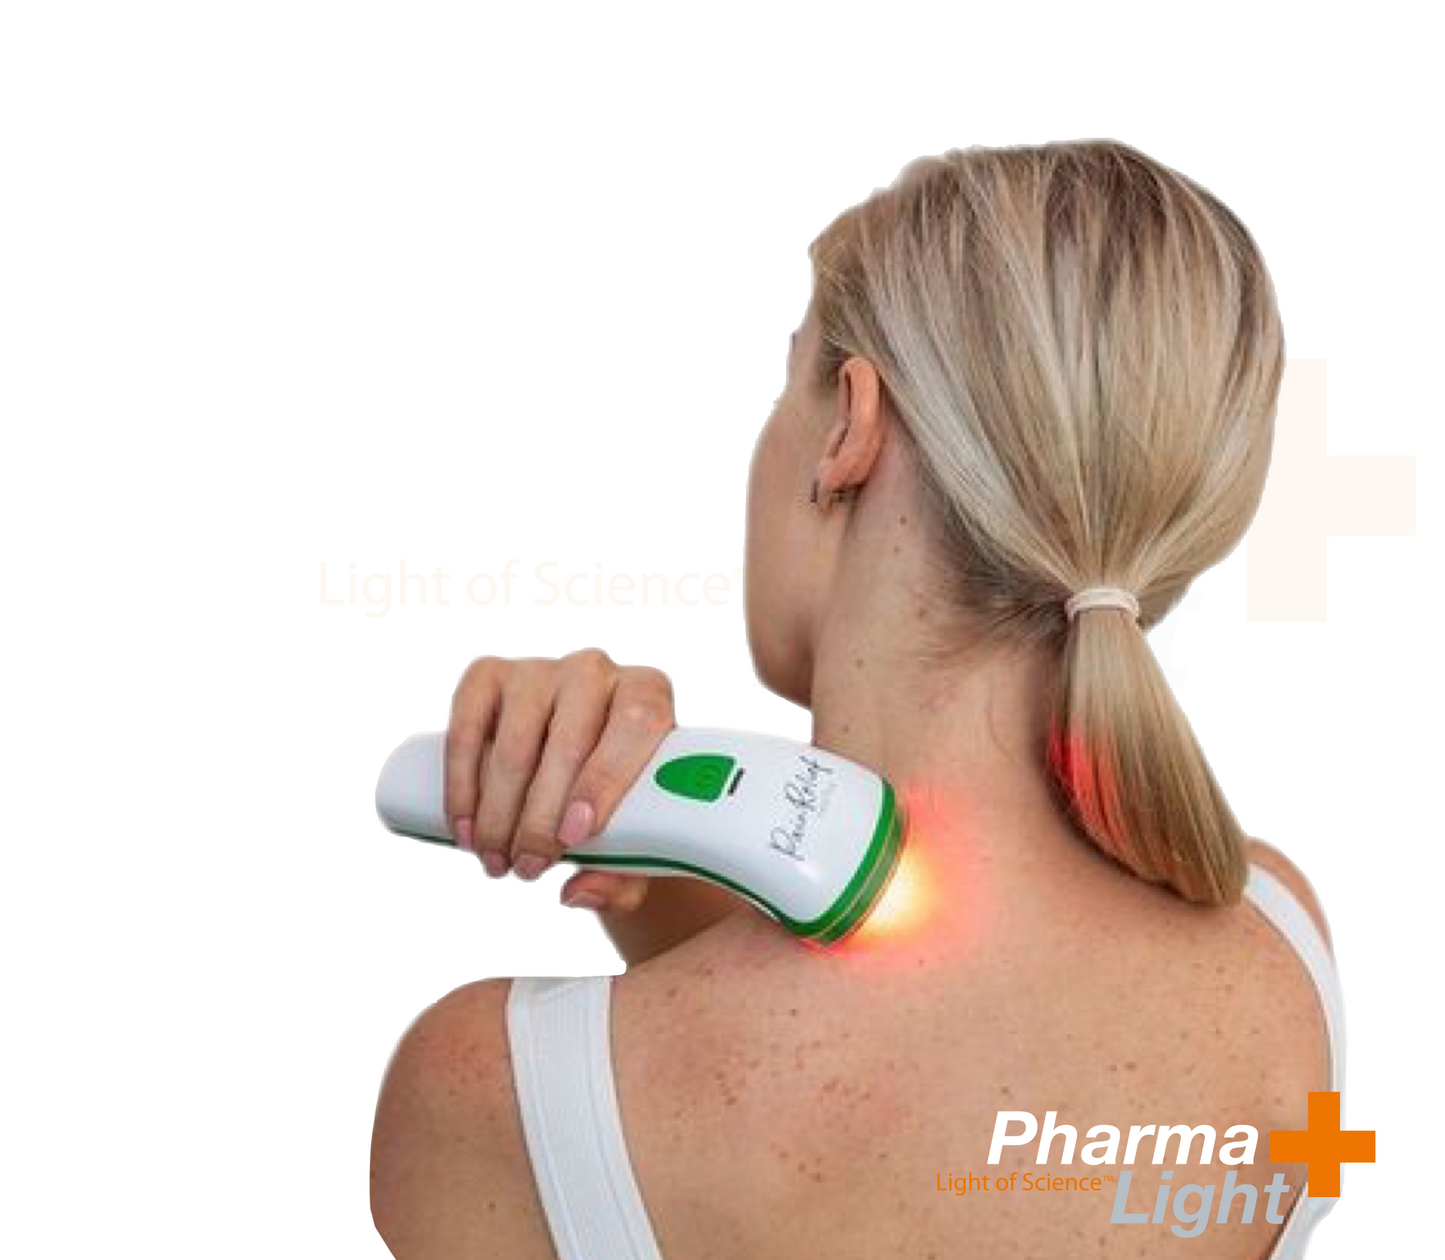 Photizo Pain Relief LED-ljusterapi/LED-LLLT